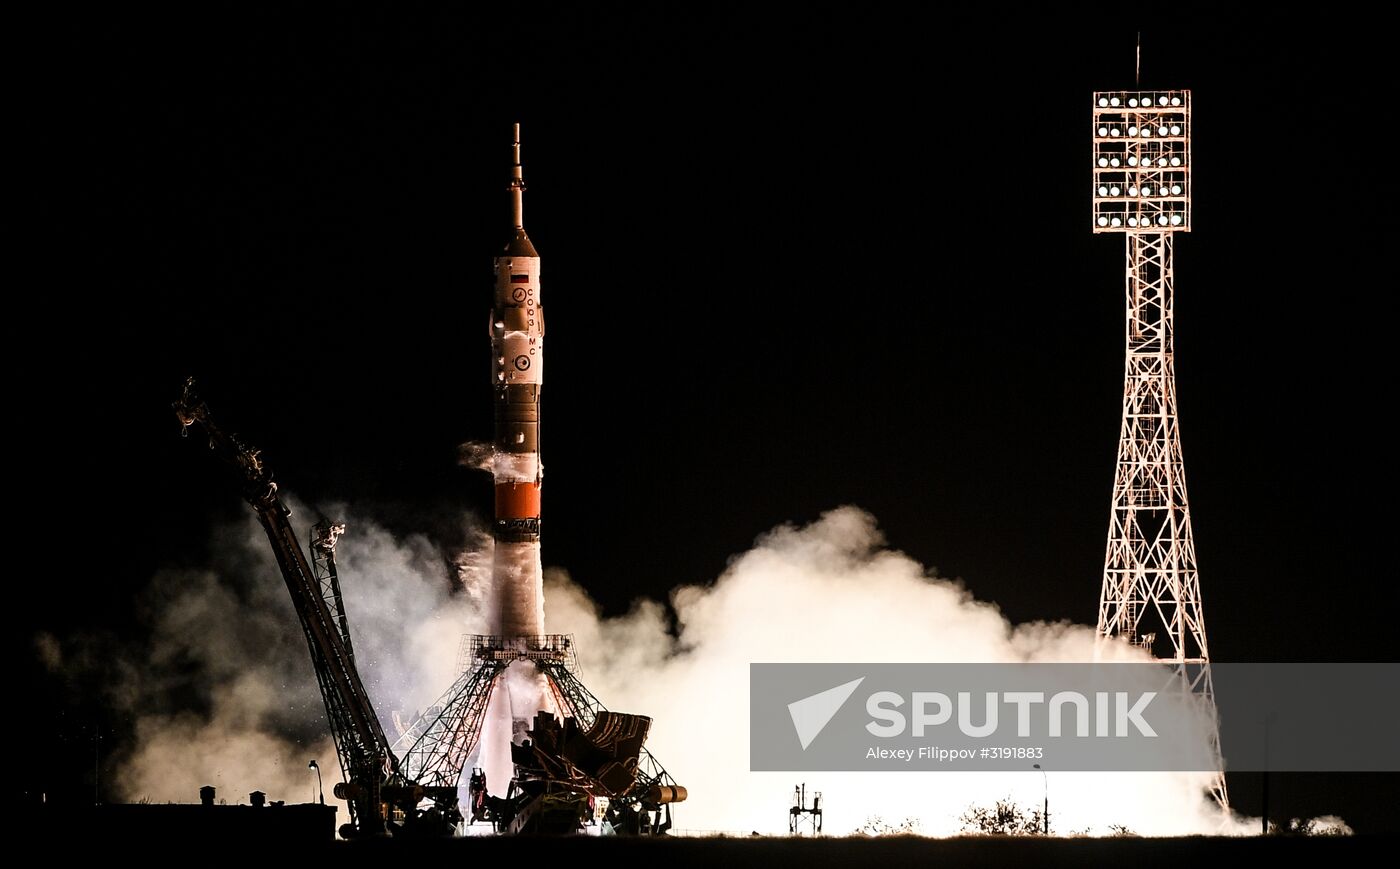 Launch of Soyuz-FG carrier rocket with manned Soyuz MS-06 spacecraft